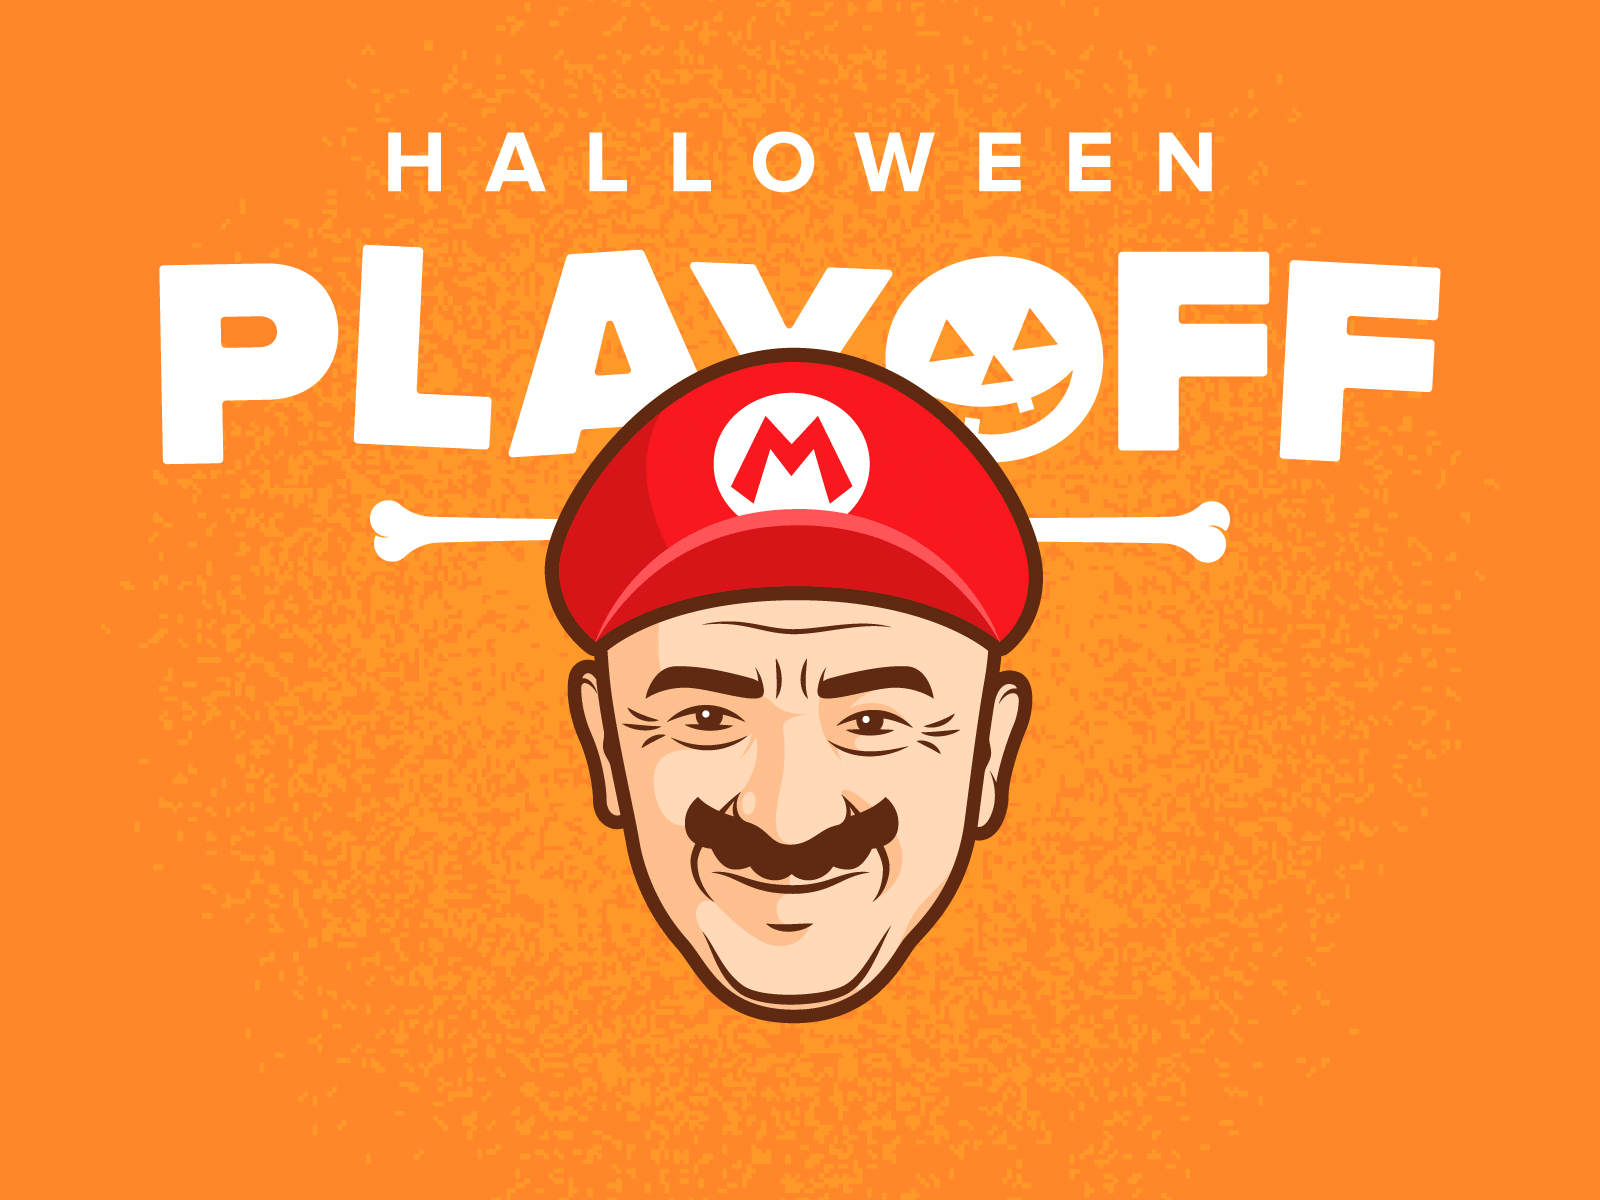 Halloween playoff! Costume inspiration needed